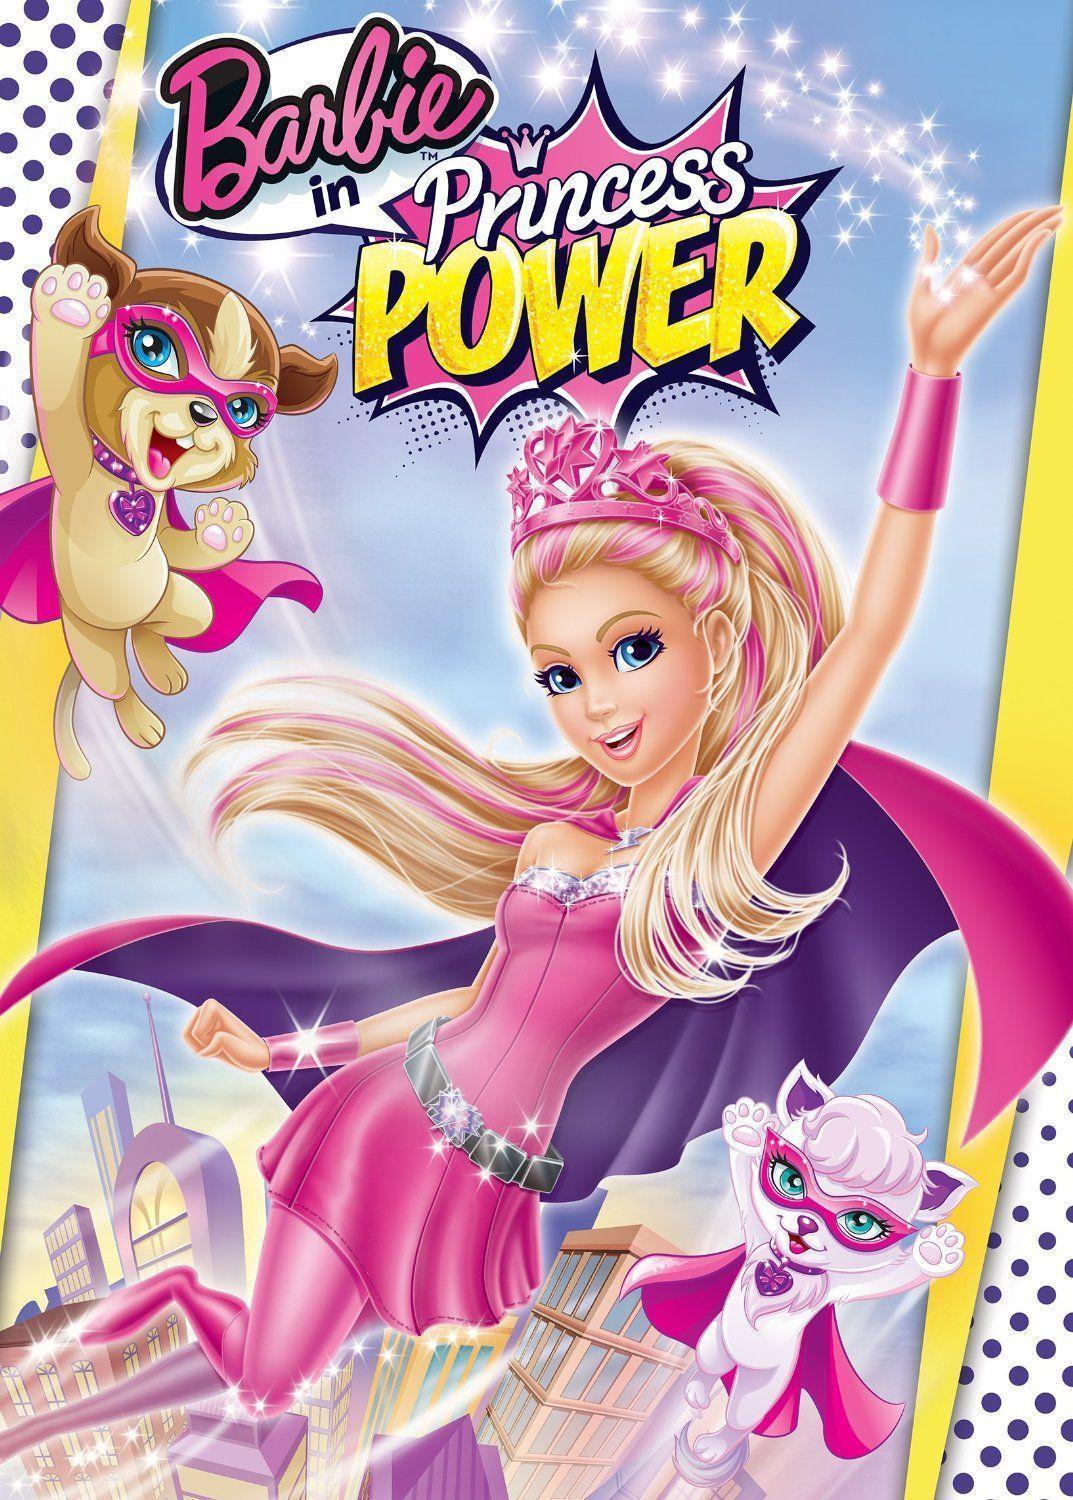 Barbie in Princess Power. Barbie Movies Wiki powered